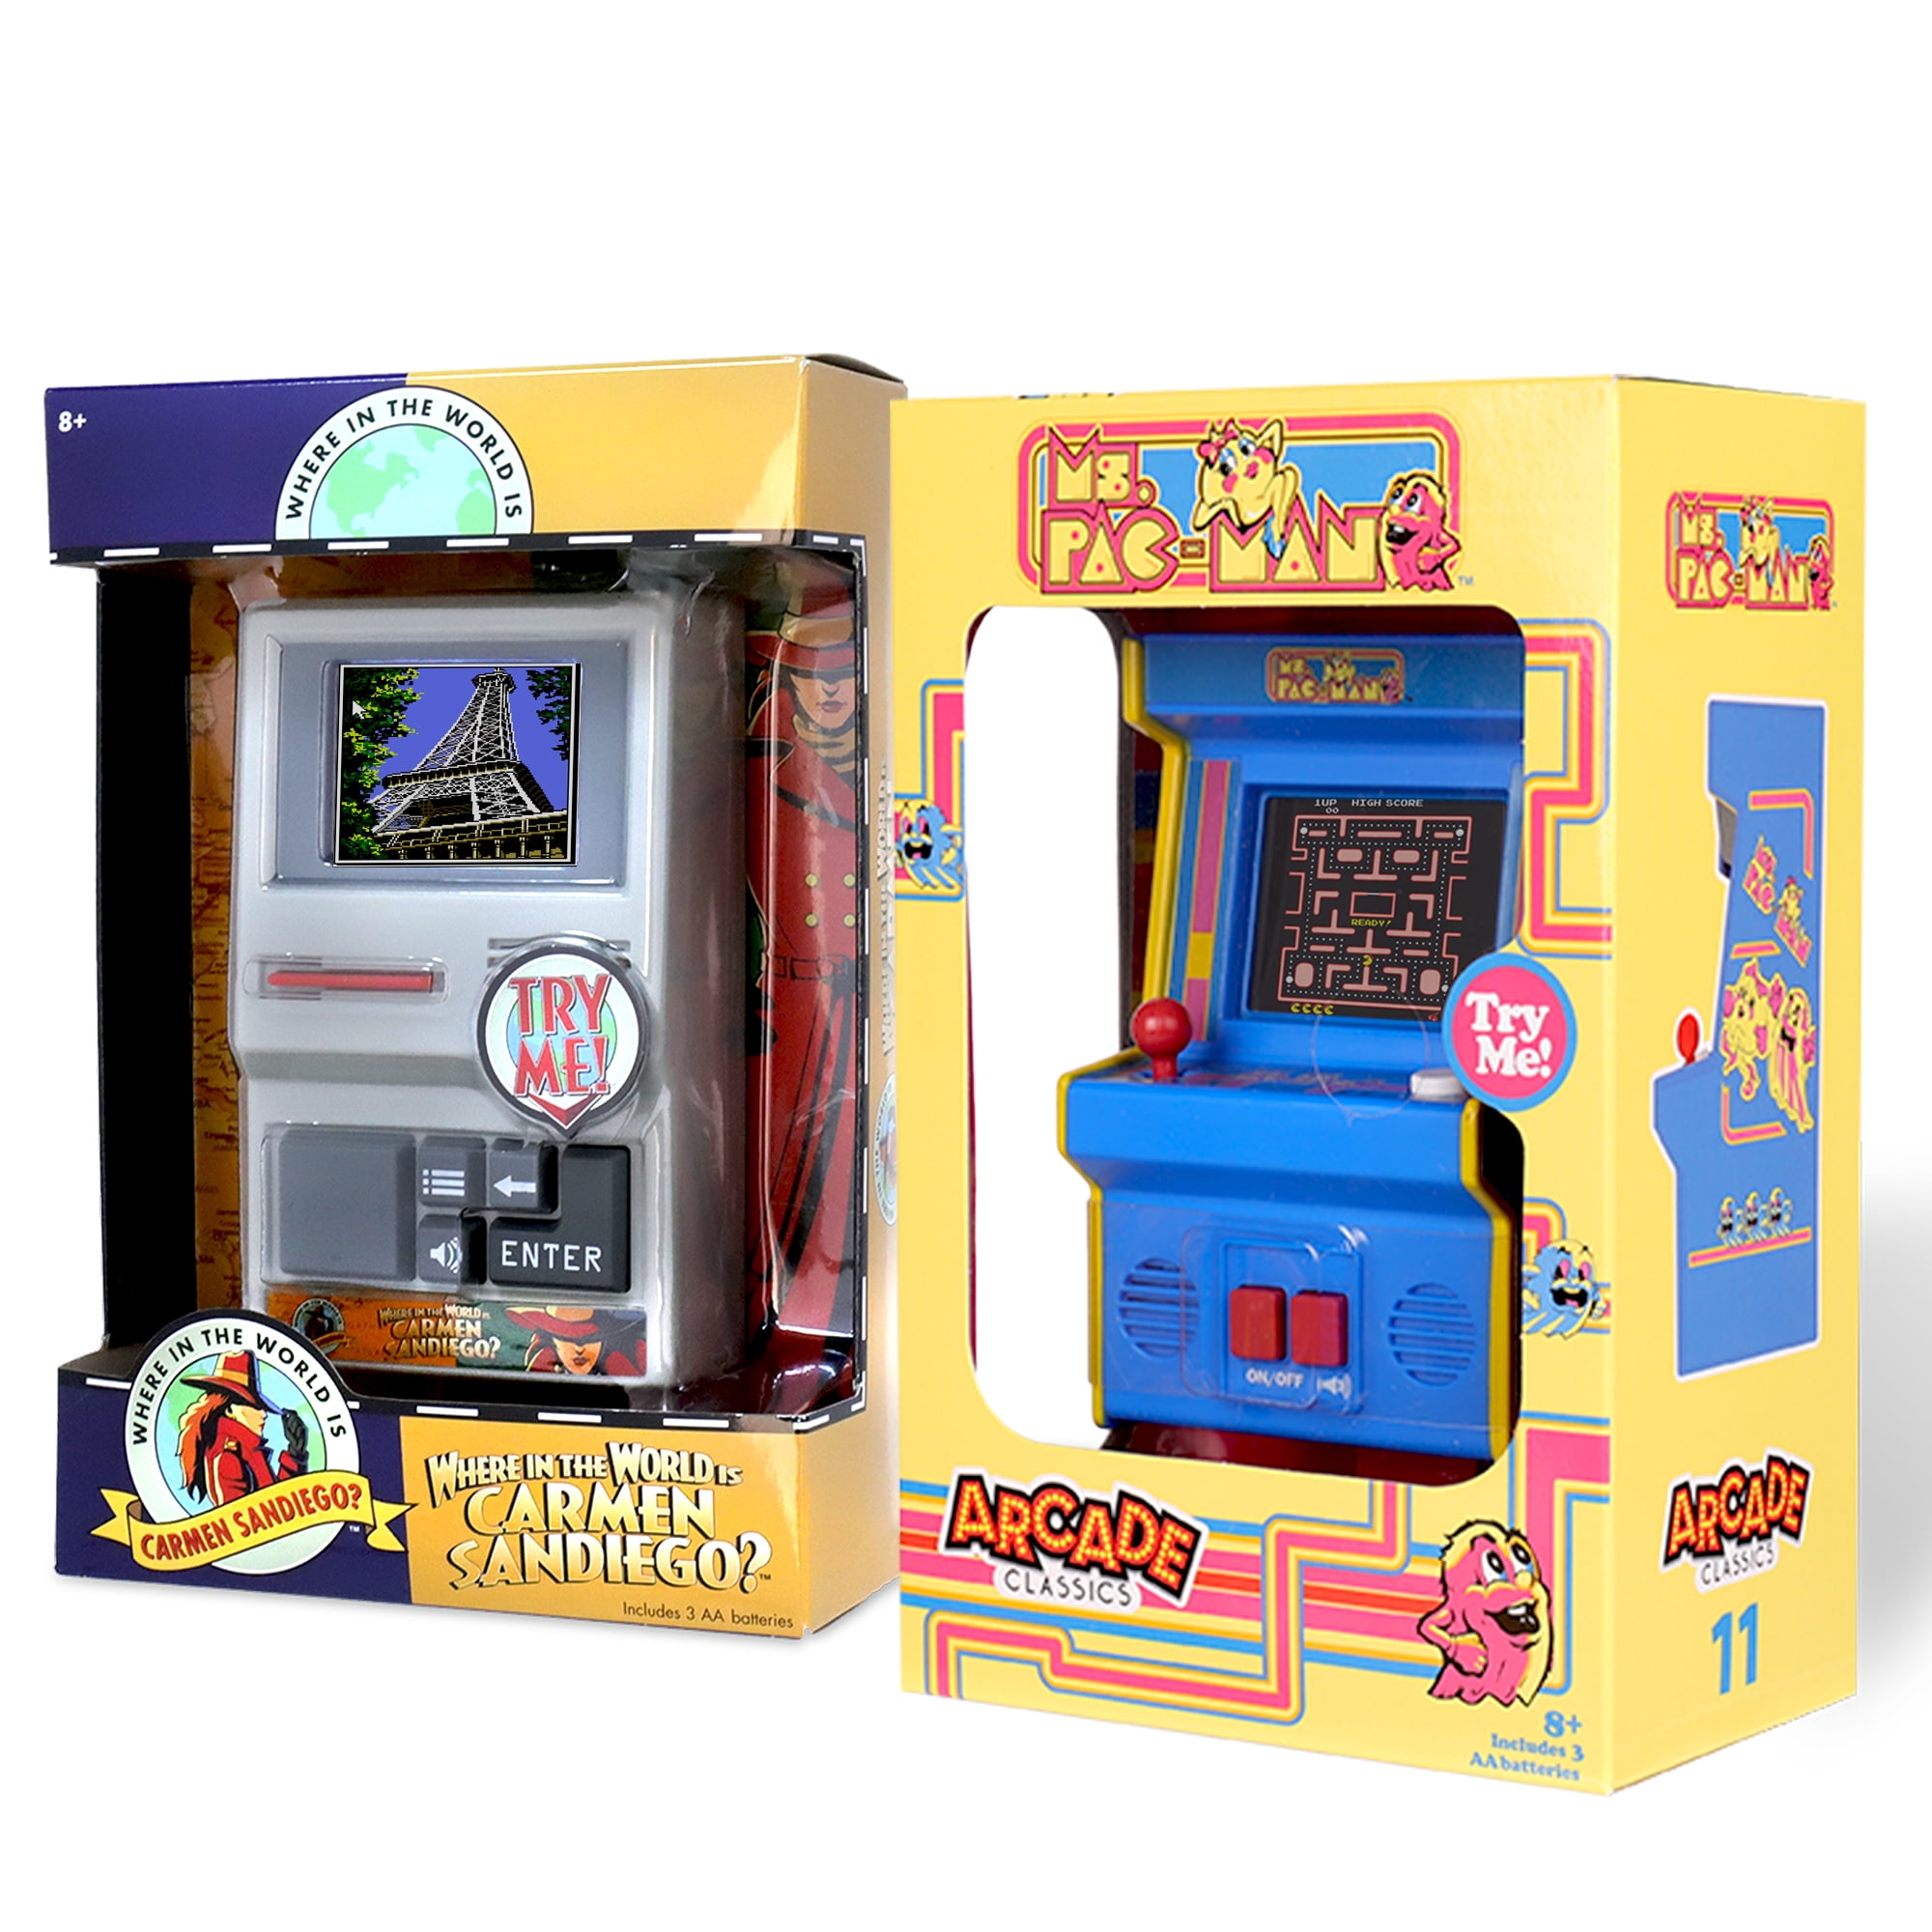 Pac-Man Mini Arcade Game Machine Vintage Classic Game Kids Electronics Play New 